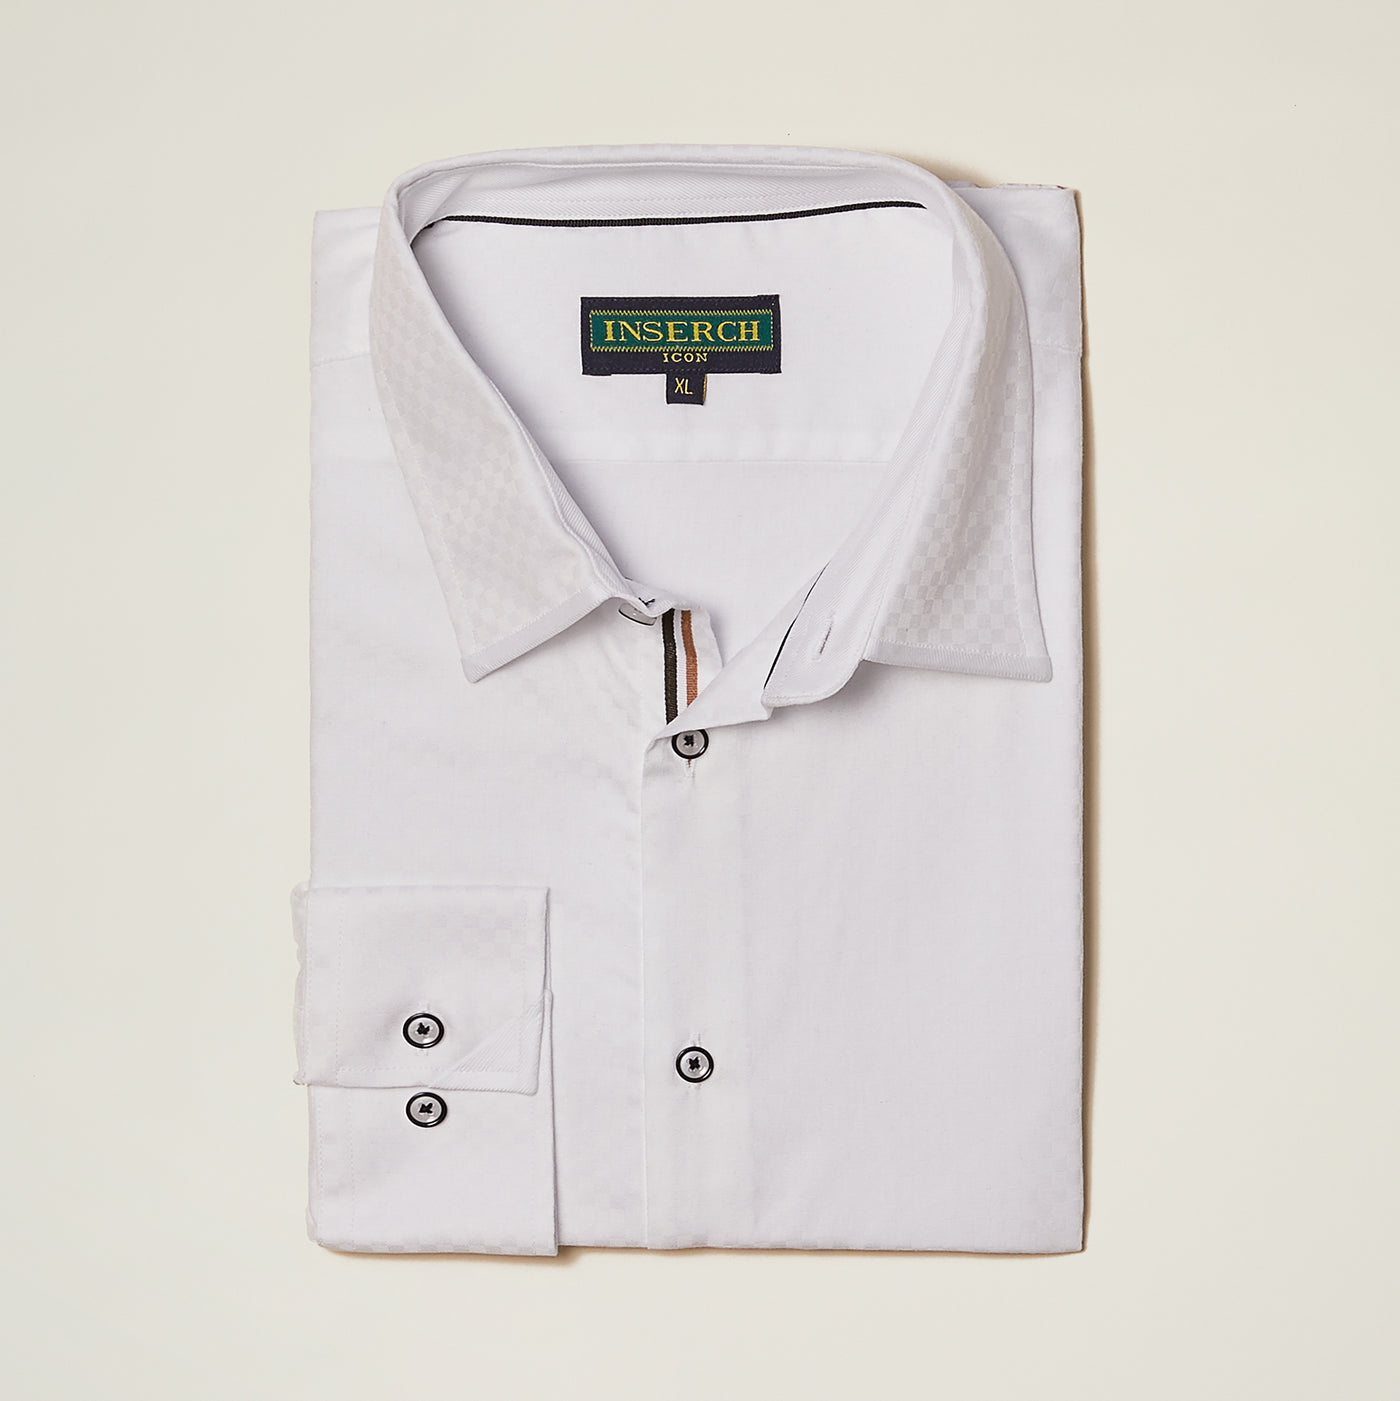 Premium Cotton Jacquard Shirt - INSERCH